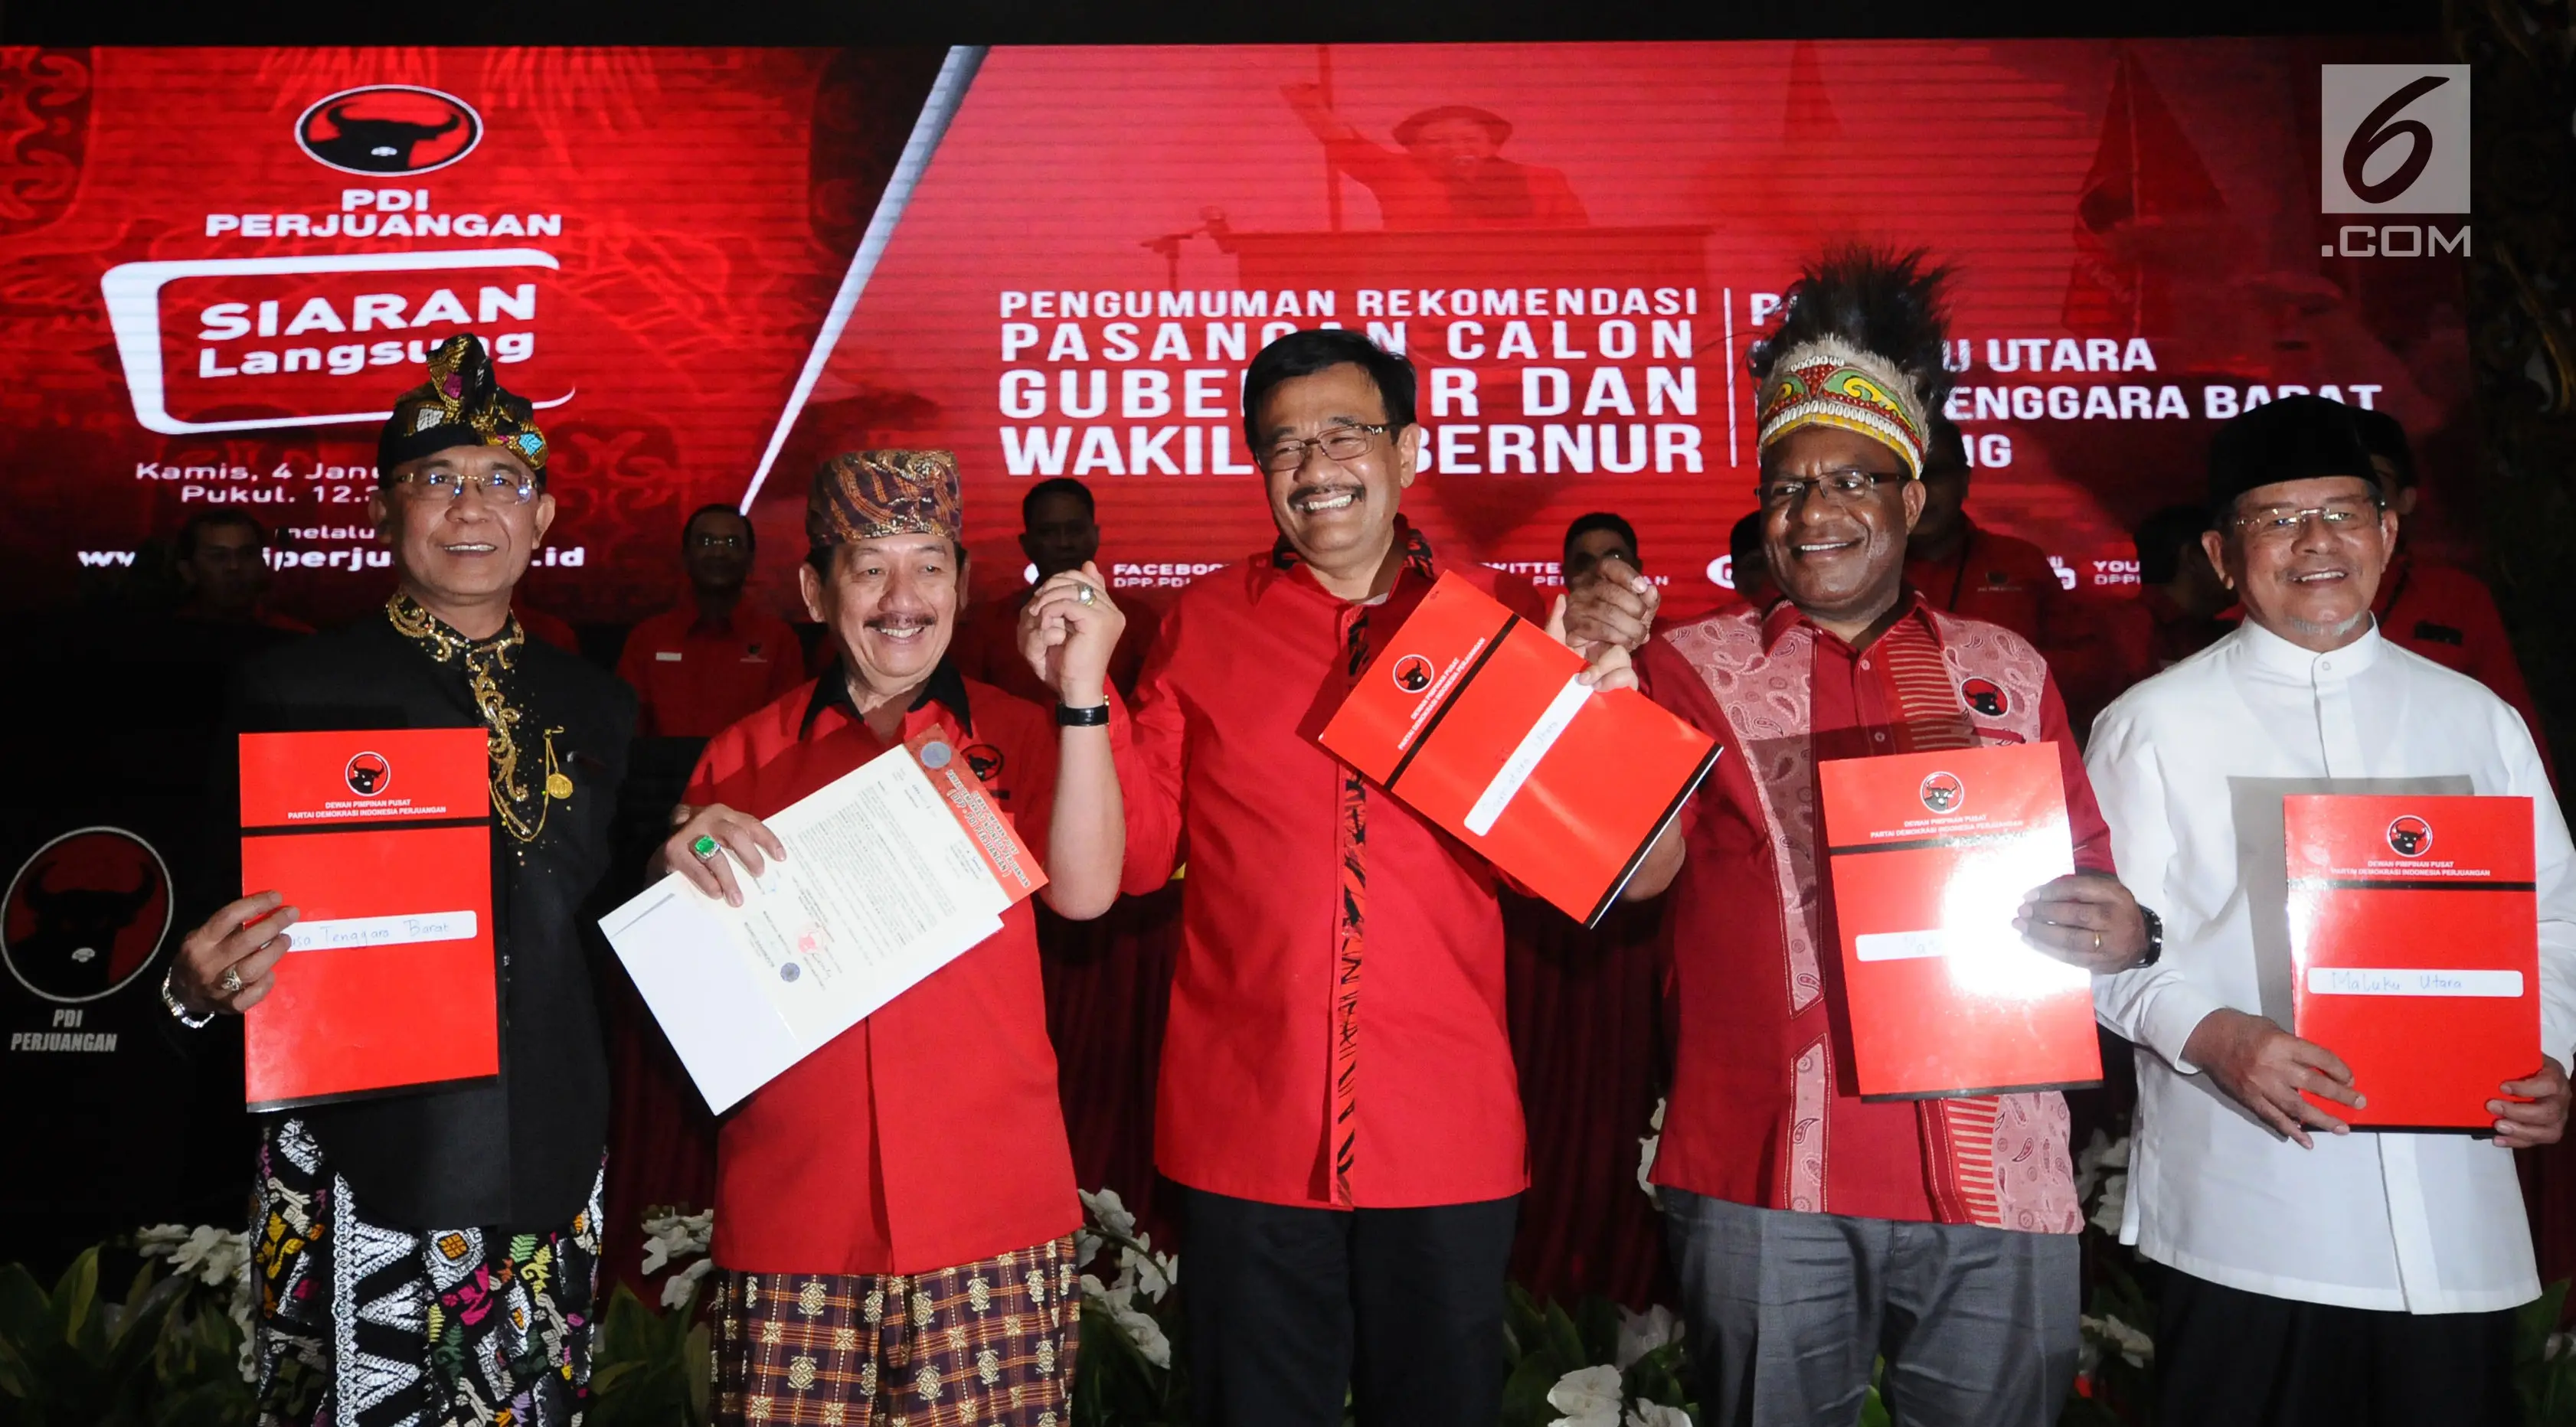 Lima Calon Gubernur yang baru menerima surat rekomendasi dari Ketua Umum DPP PDIP, Megawati Sukarnoputri berfoto bersama di Jakarta, Kamis (4/1). PDIP secara resmi mengumumkan empat pasang cagub dan cawagub. (Liputan6.com/Helmi Fithriansyah)